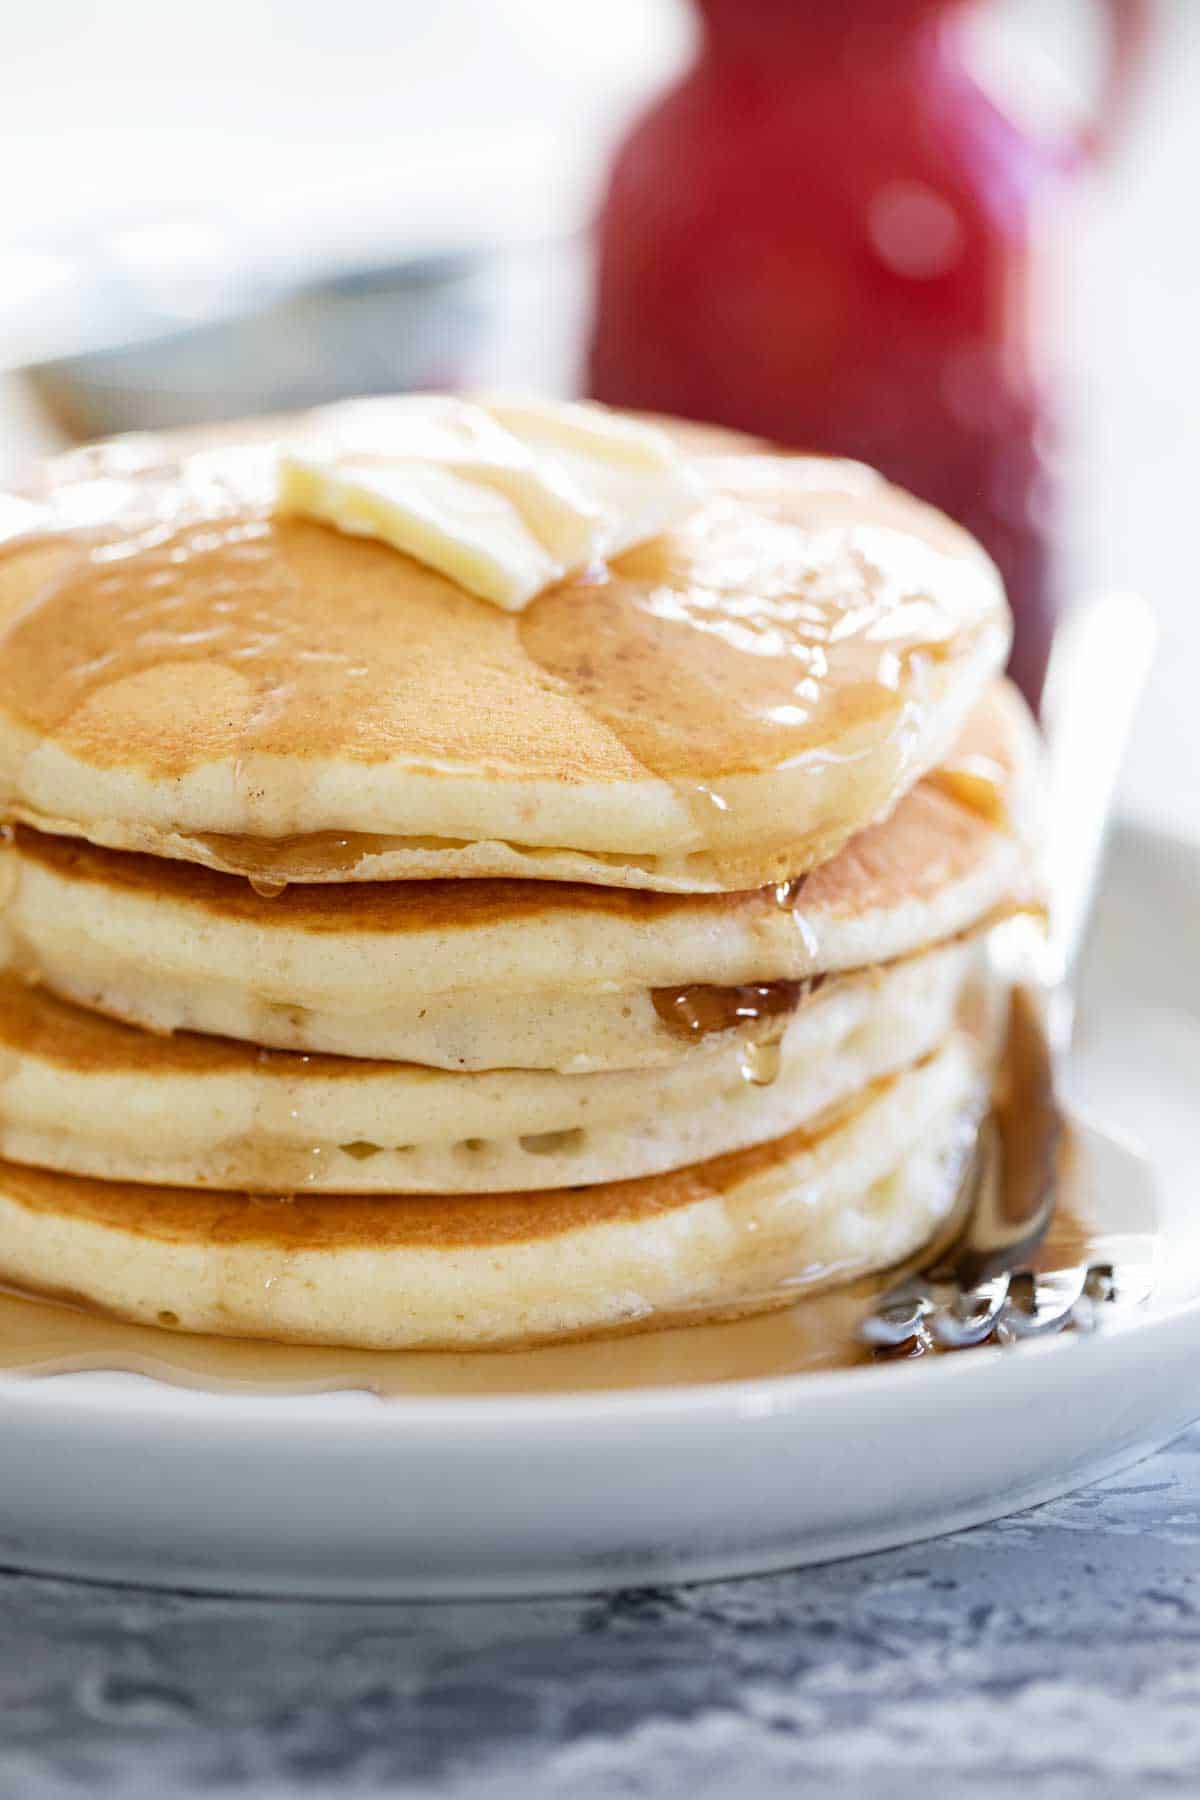 https://www.tasteandtellblog.com/wp-content/uploads/2020/03/The-Best-Pancake-Recipe-3.jpg